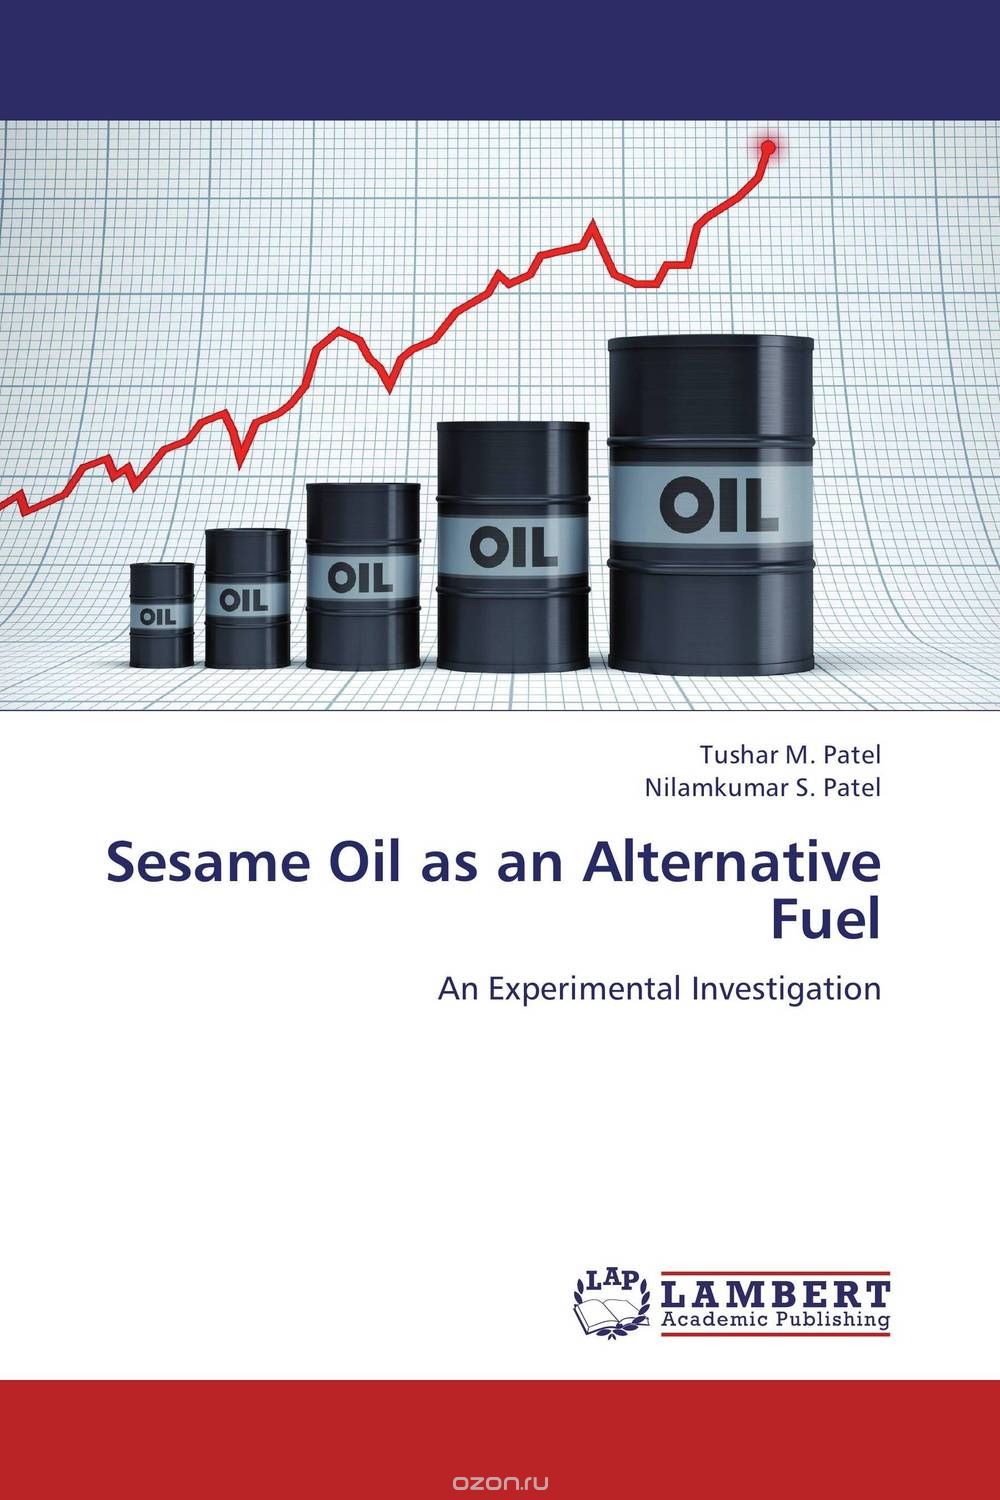 Скачать книгу "Sesame Oil as an Alternative Fuel"